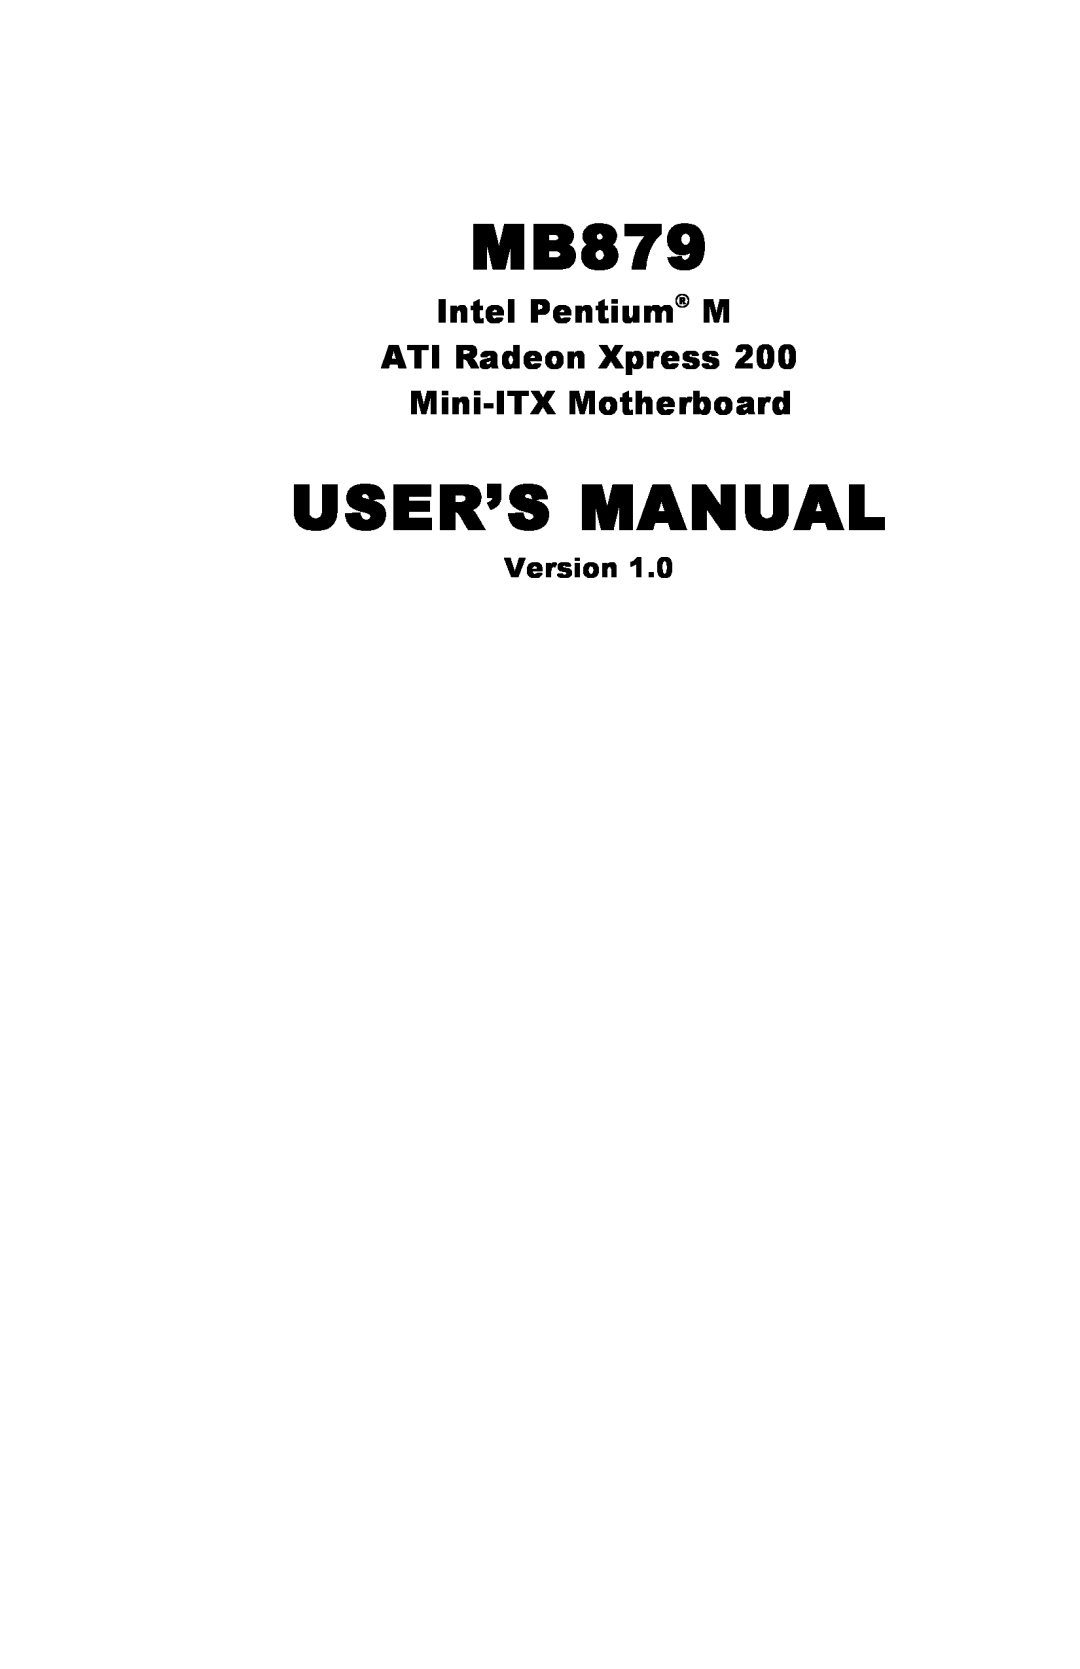 Intel MB879 user manual Intel Pentium M ATI Radeon Xpress, Mini-ITXMotherboard, Version, User’S Manual 